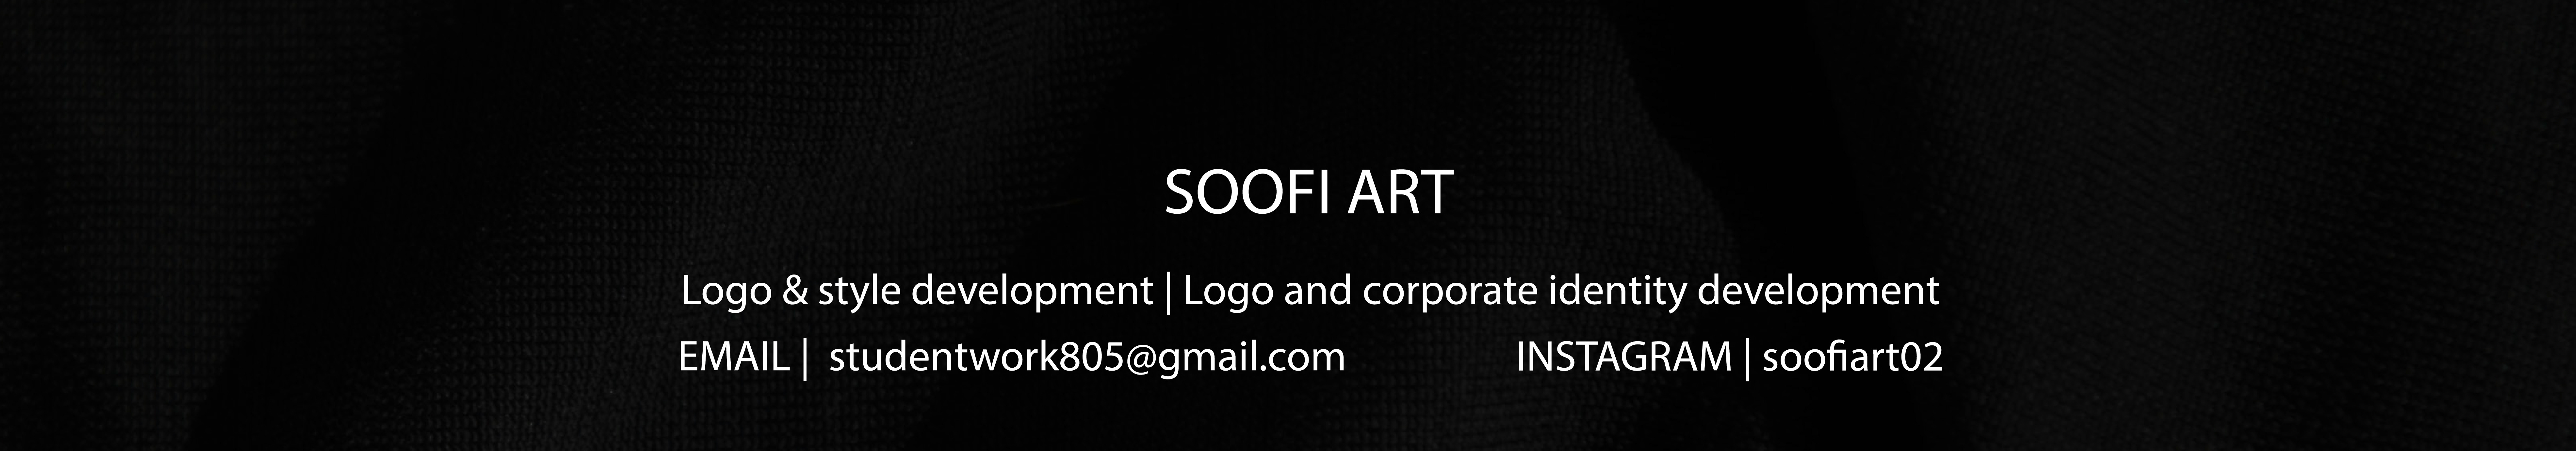 Soofi Art's profile banner